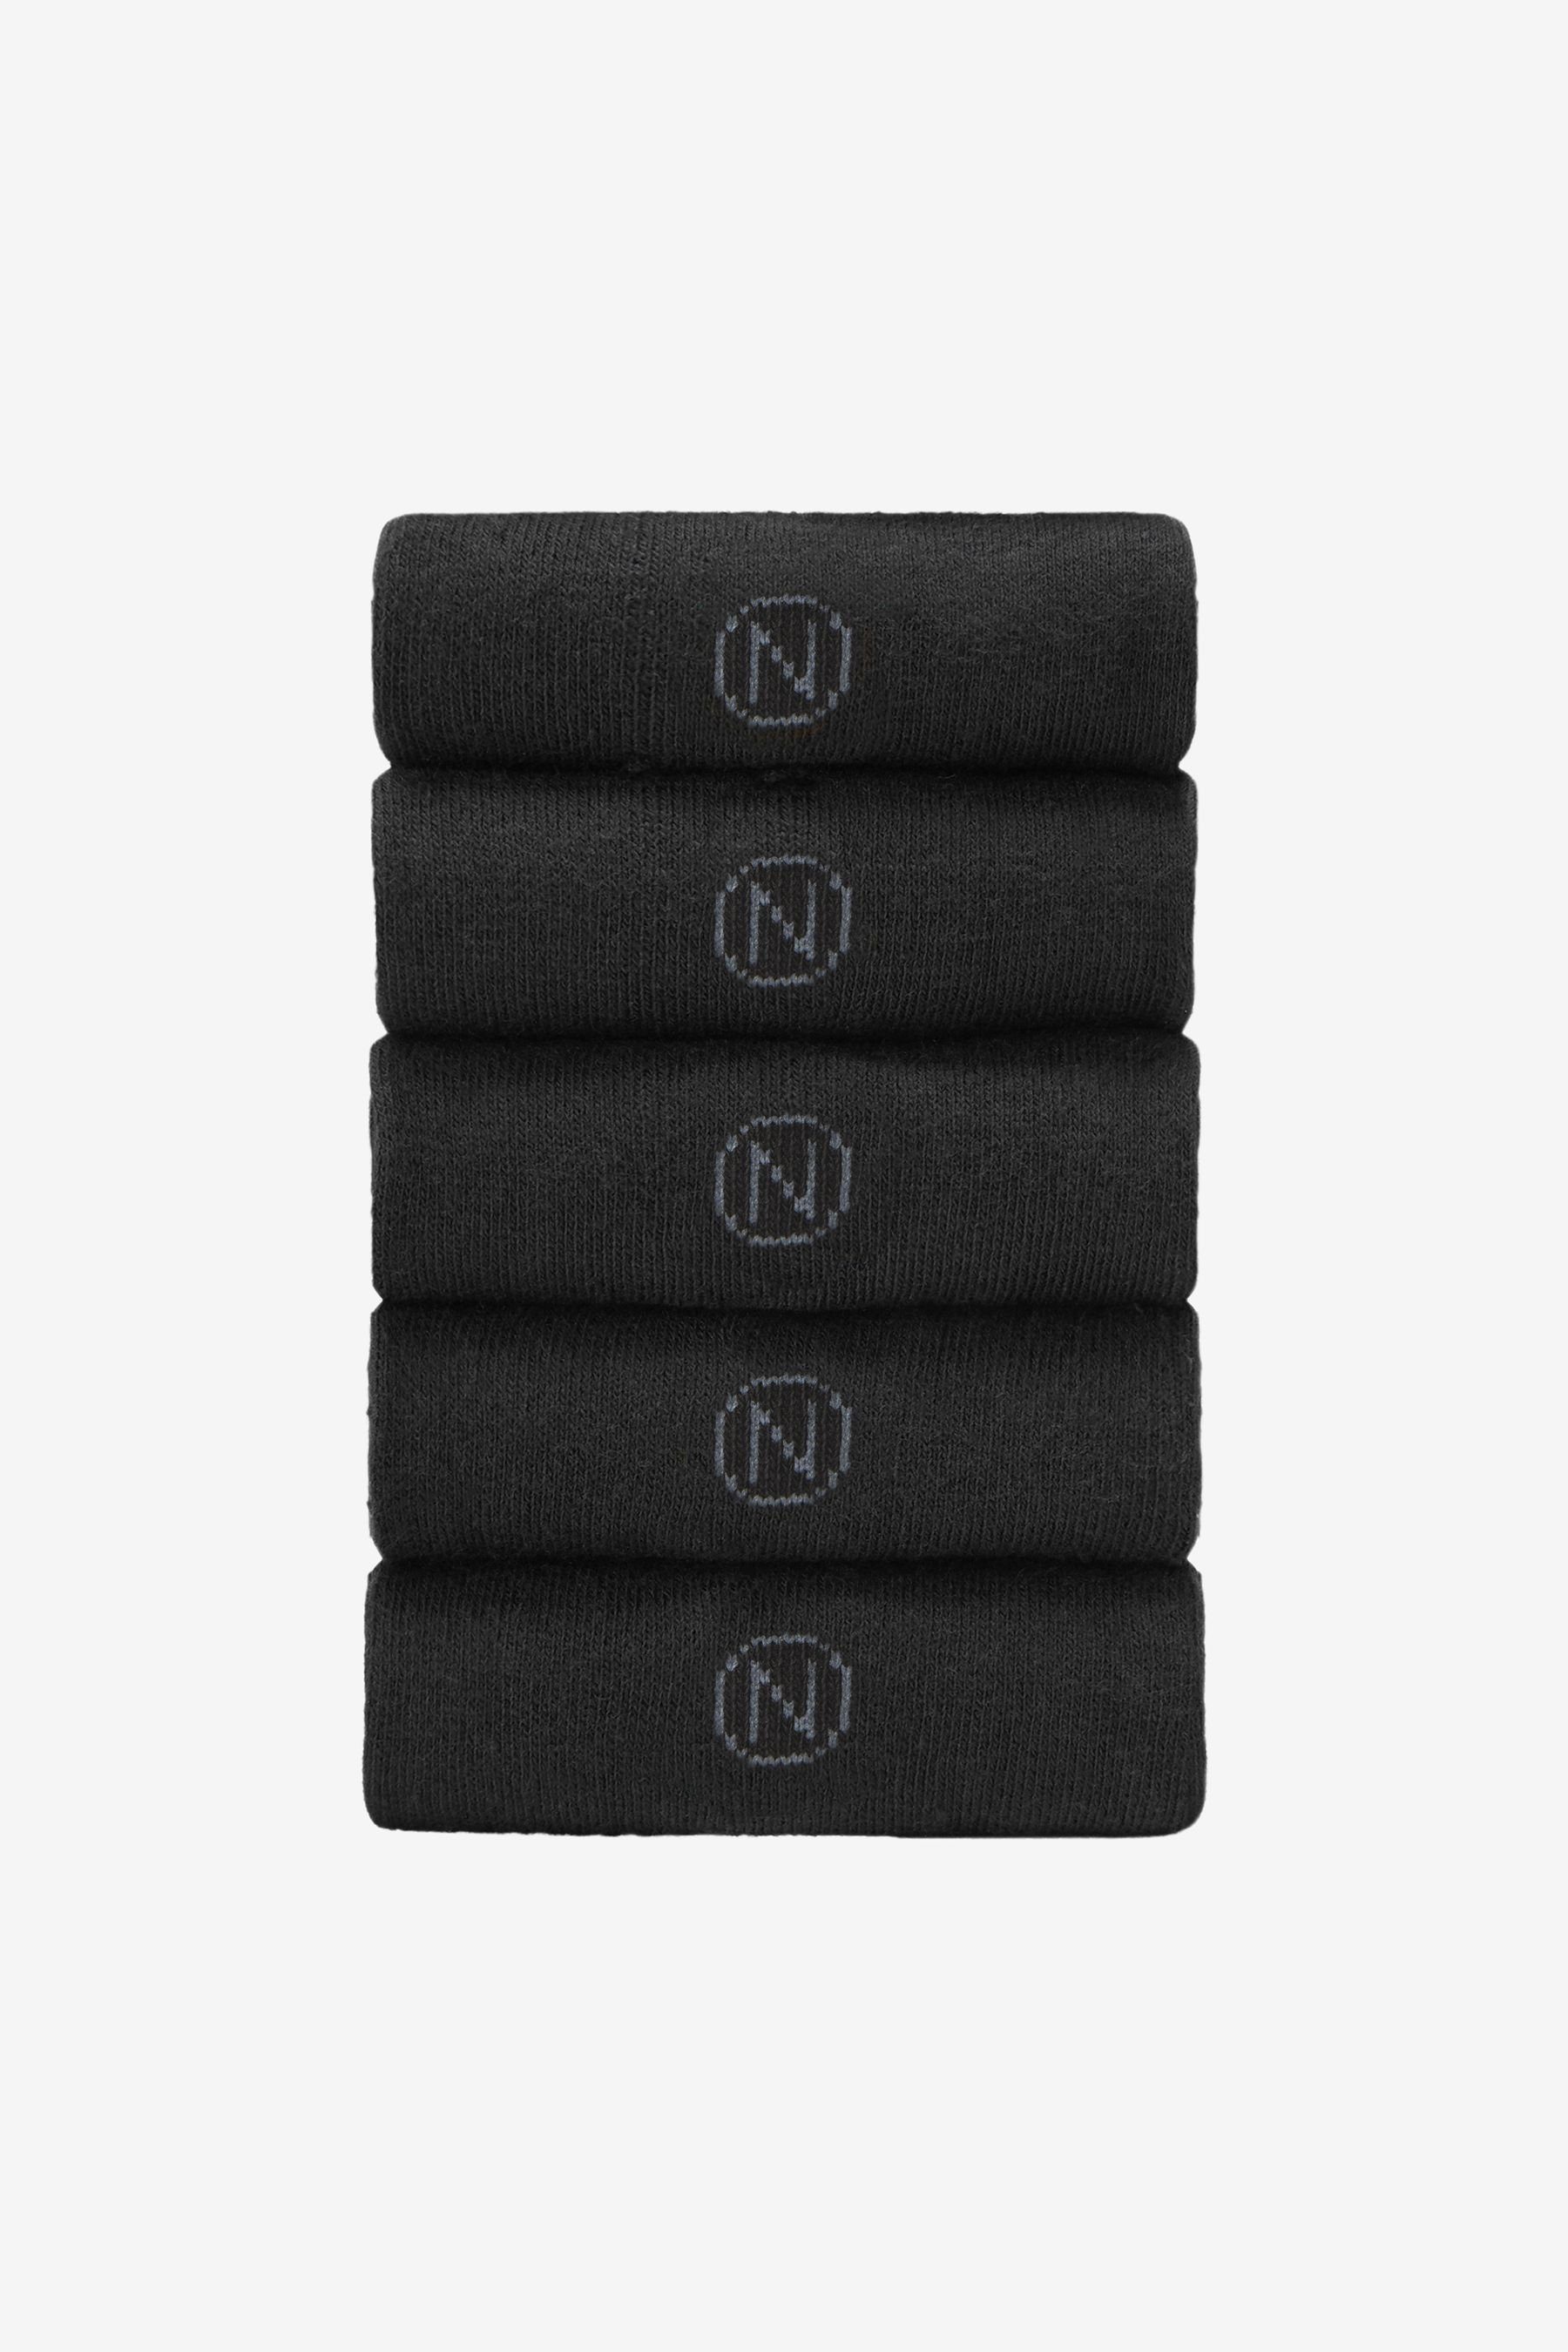 Next Kurzsocken 5er-Pack Socken mit Sohle Black gepolsterter (5-Paar)